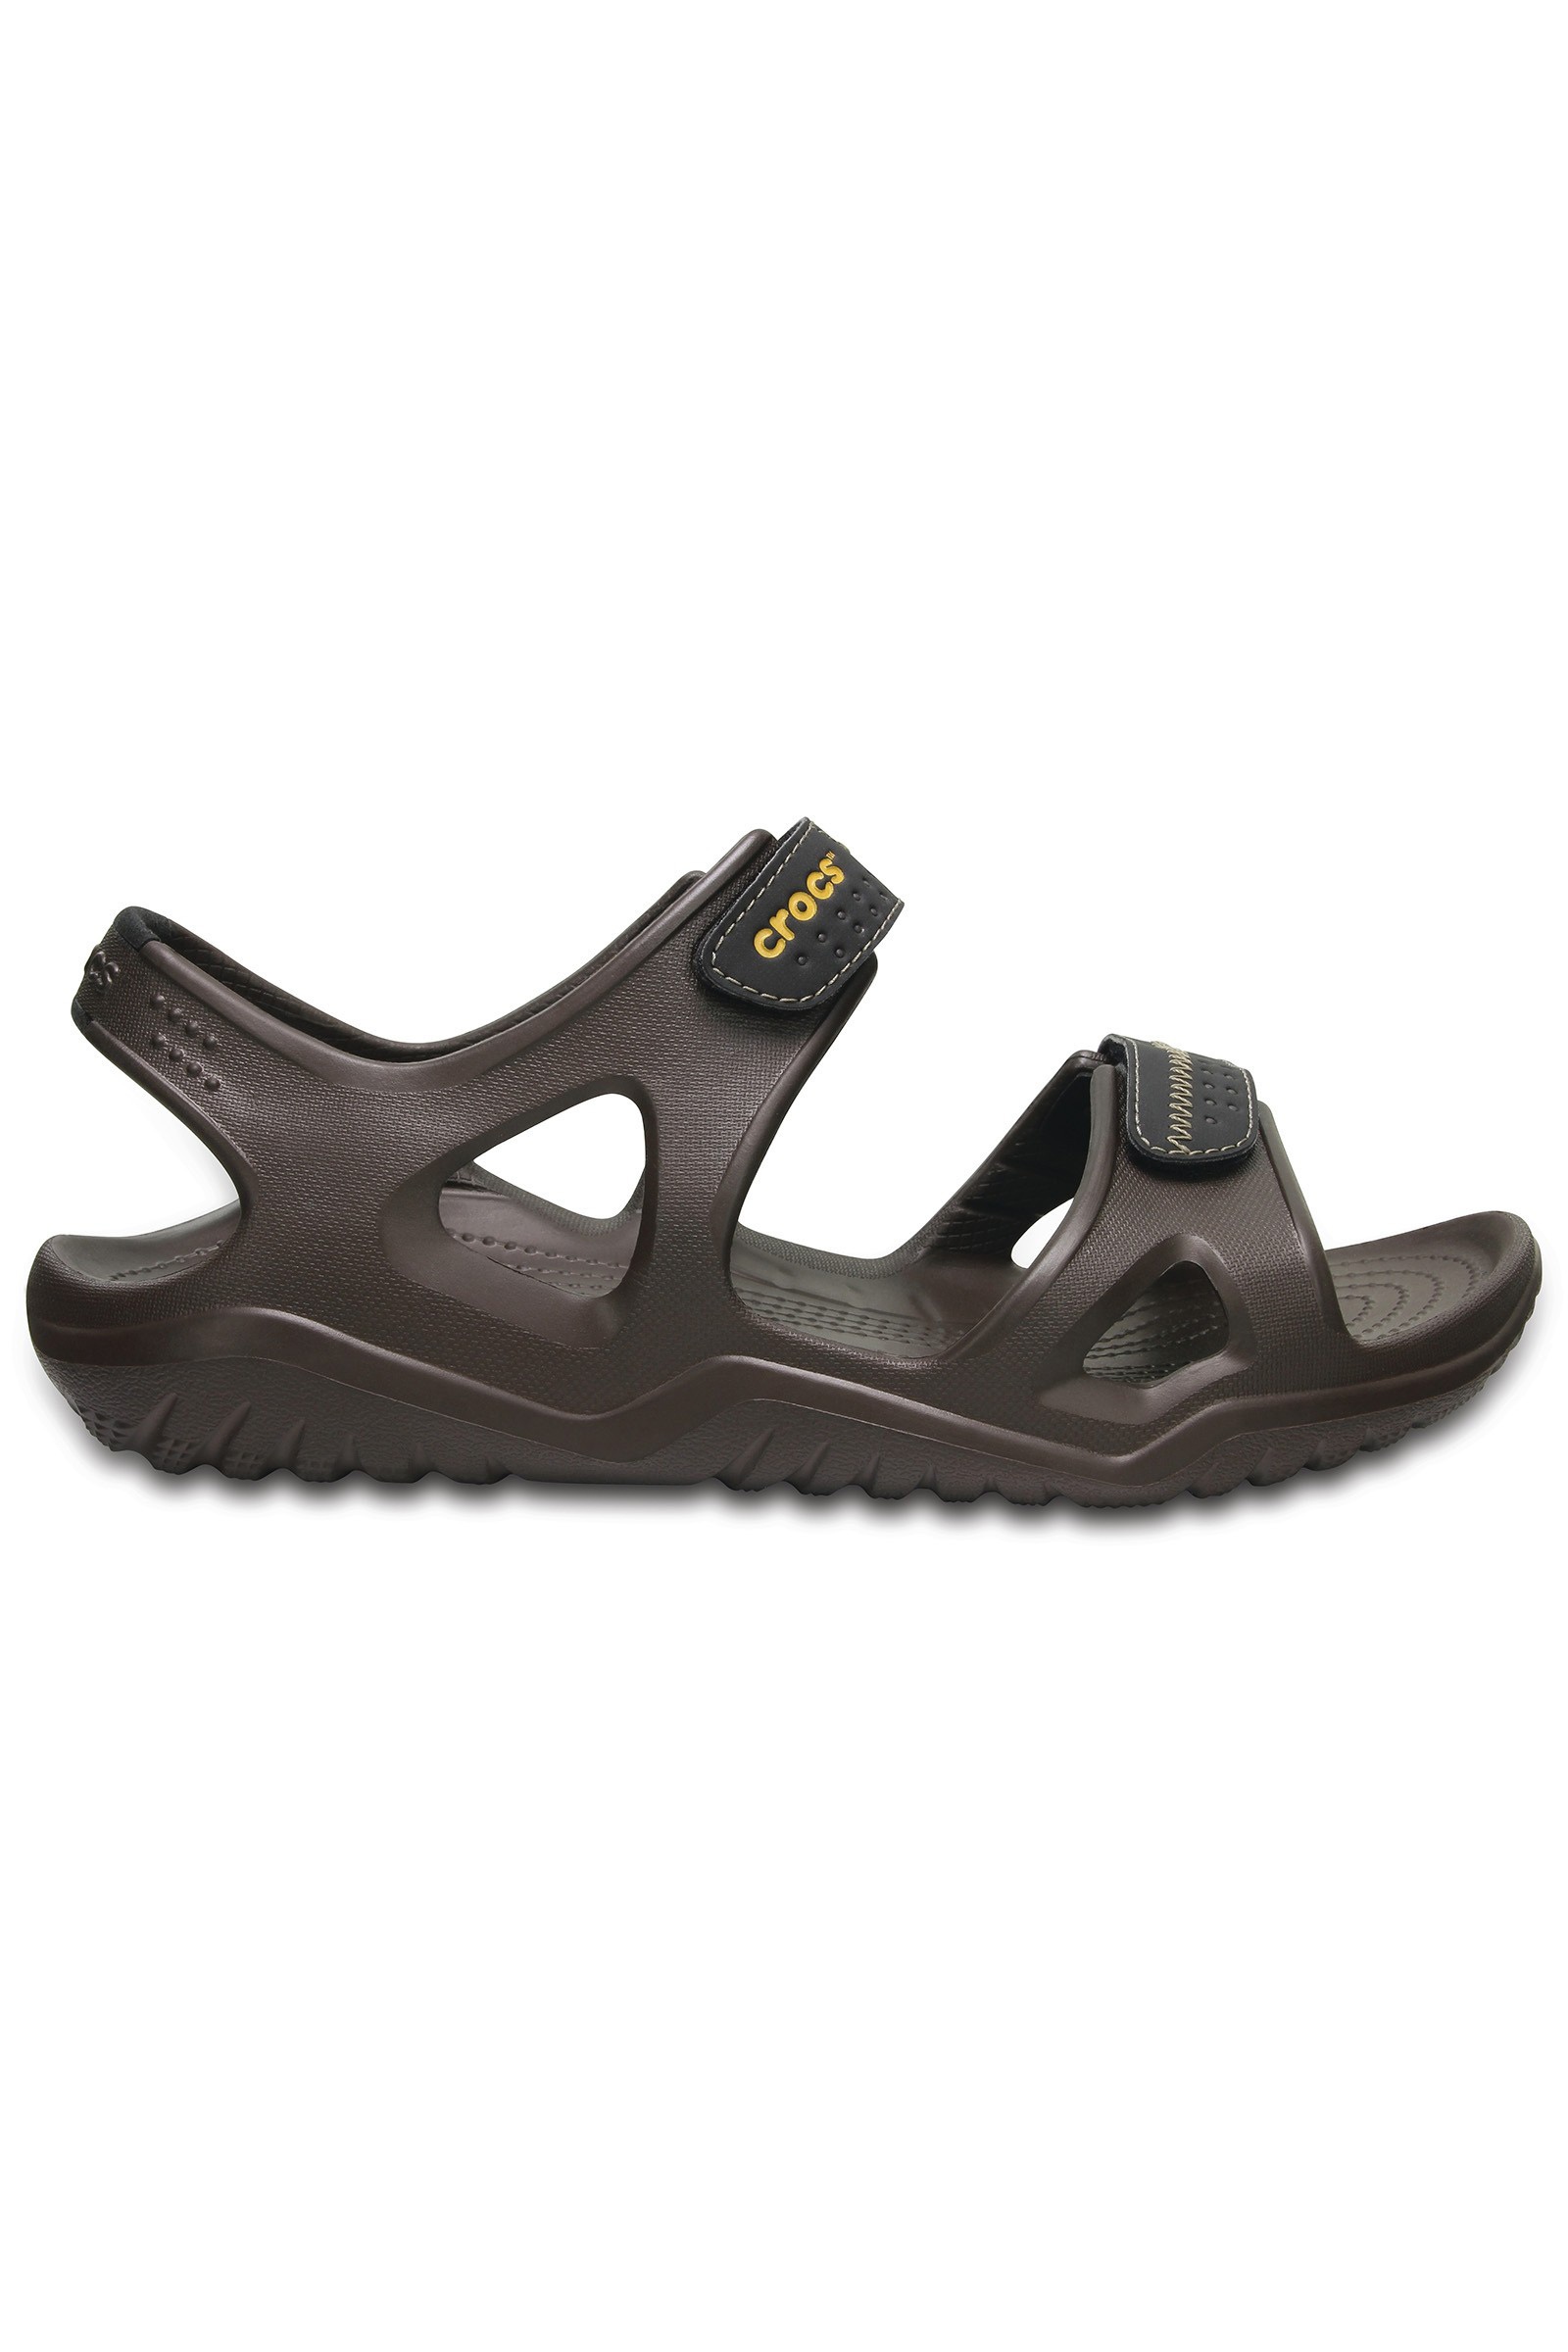 crocs swiftwater river slingback sandals